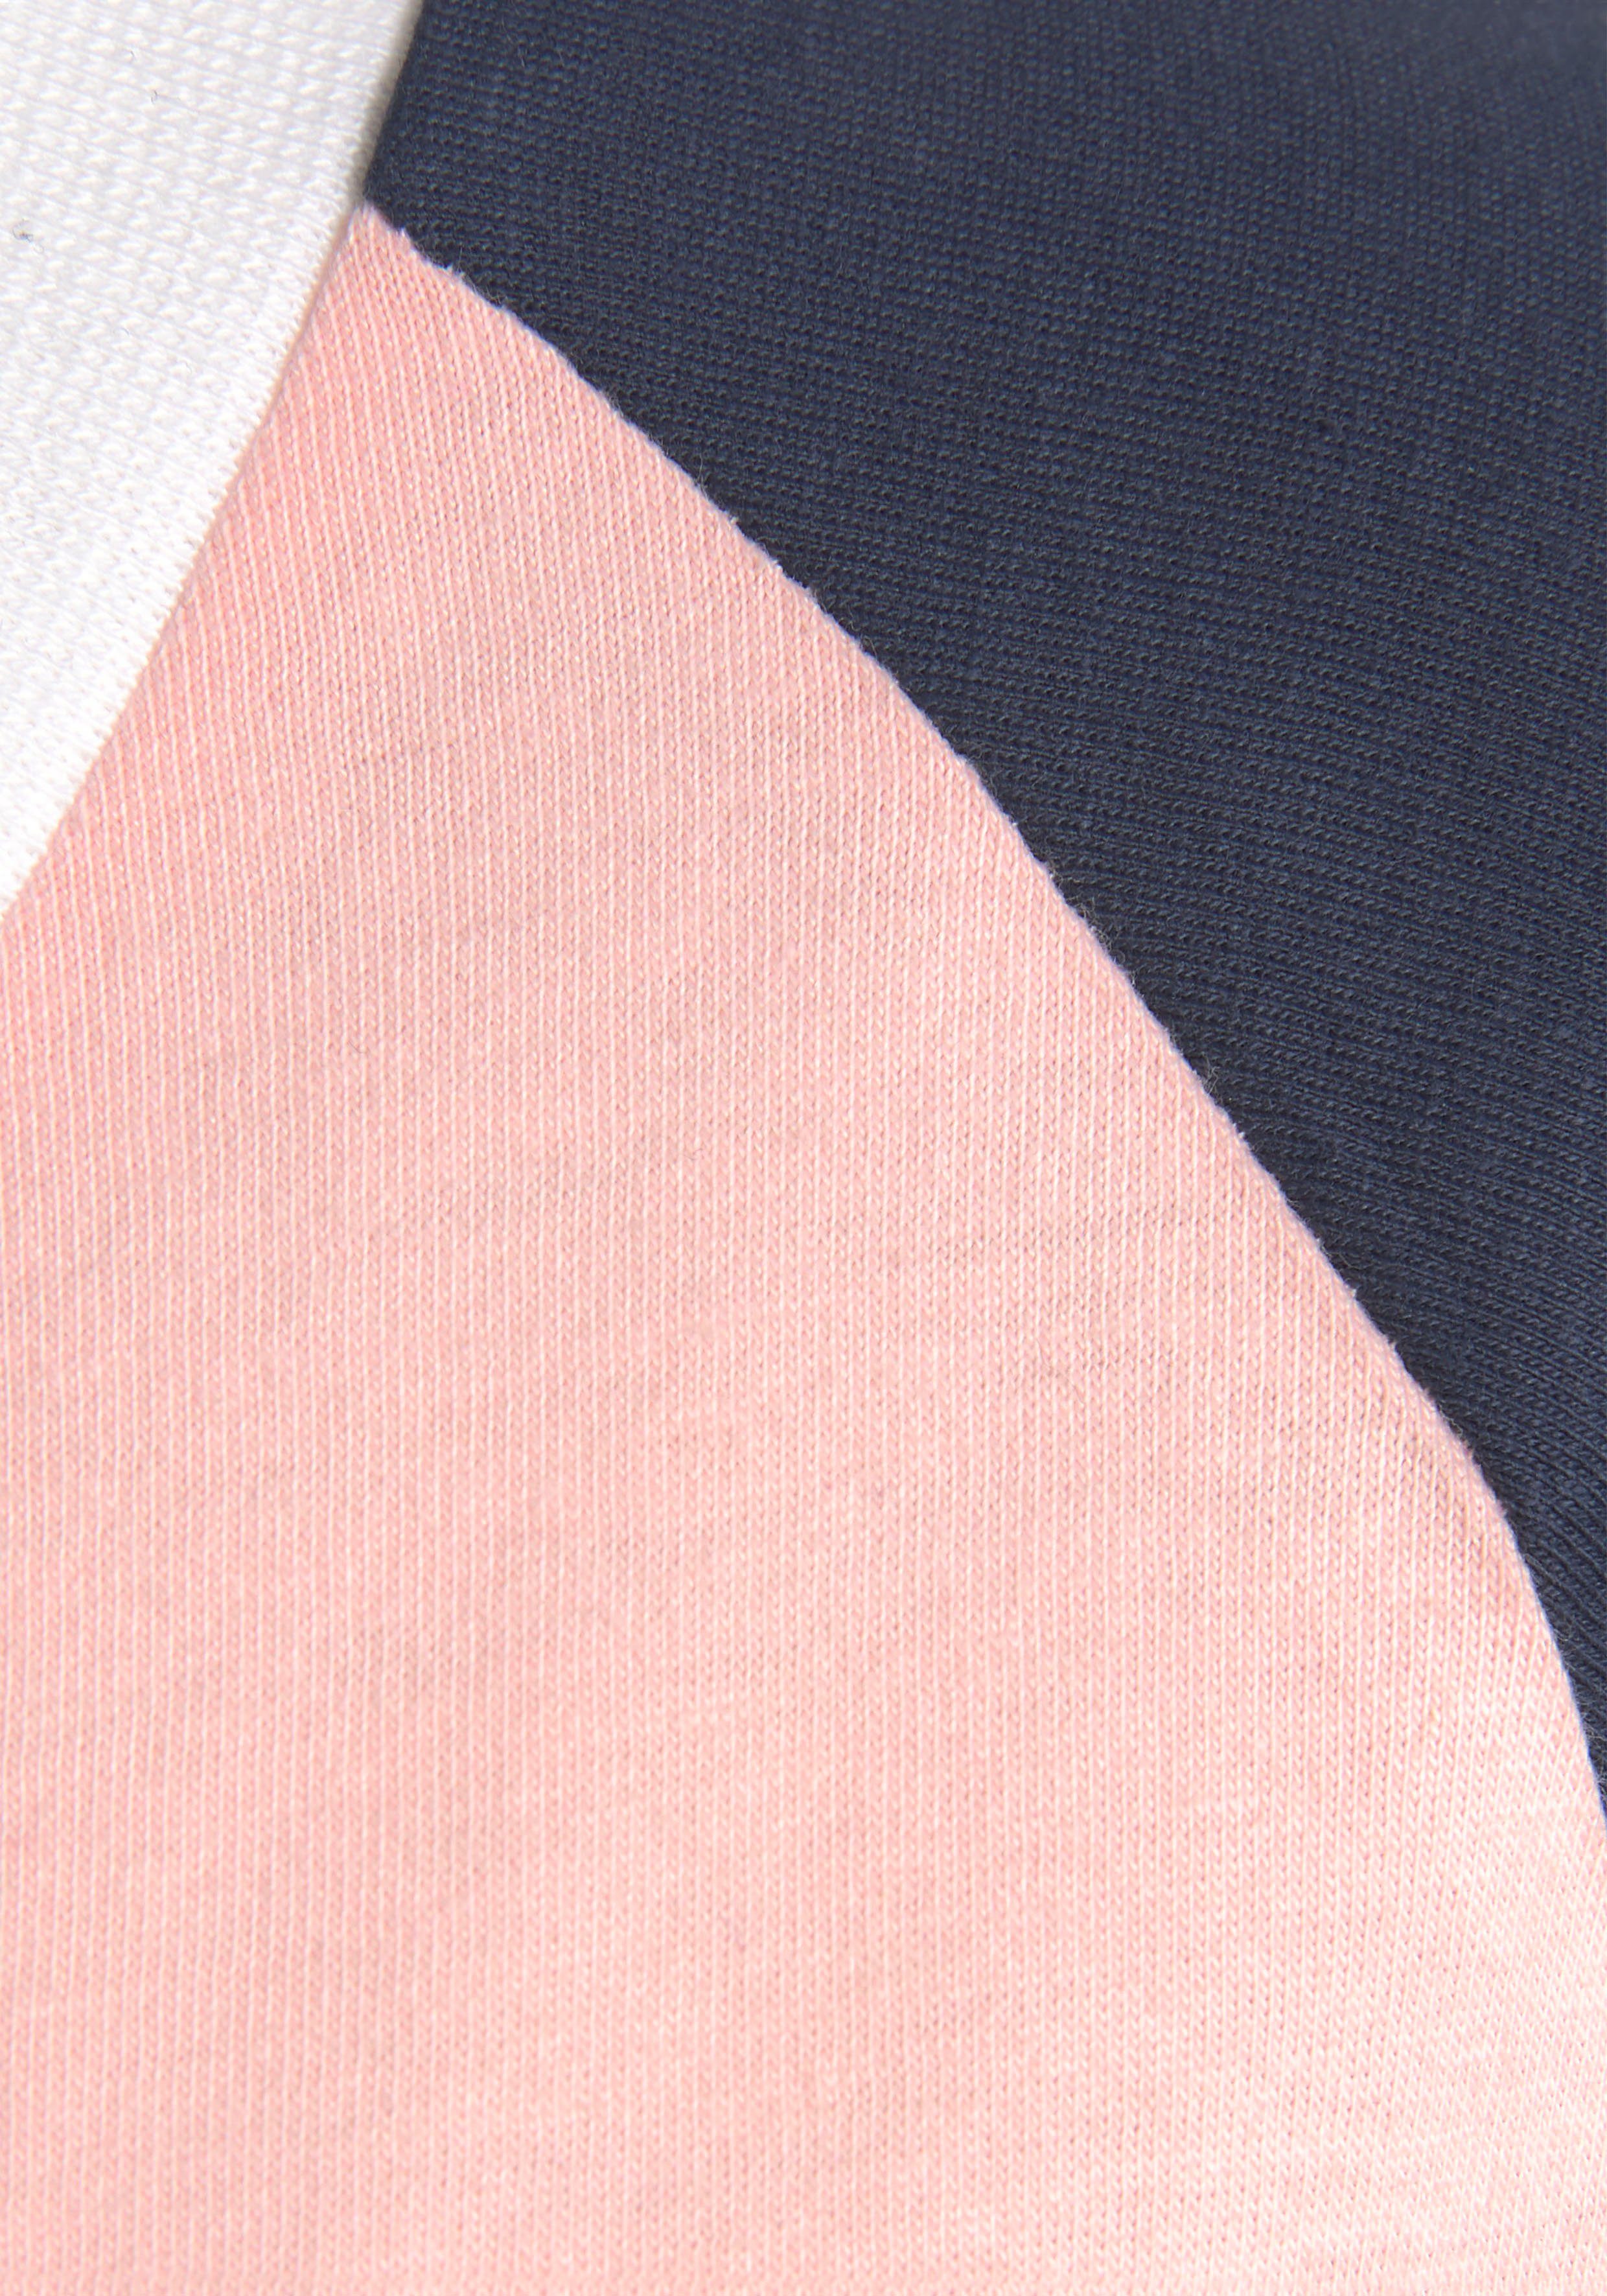 KangaROOS Pyjama (2 tlg., mit rosa-dunkelblau Stück) kontrastfarbenen Raglanärmeln 1